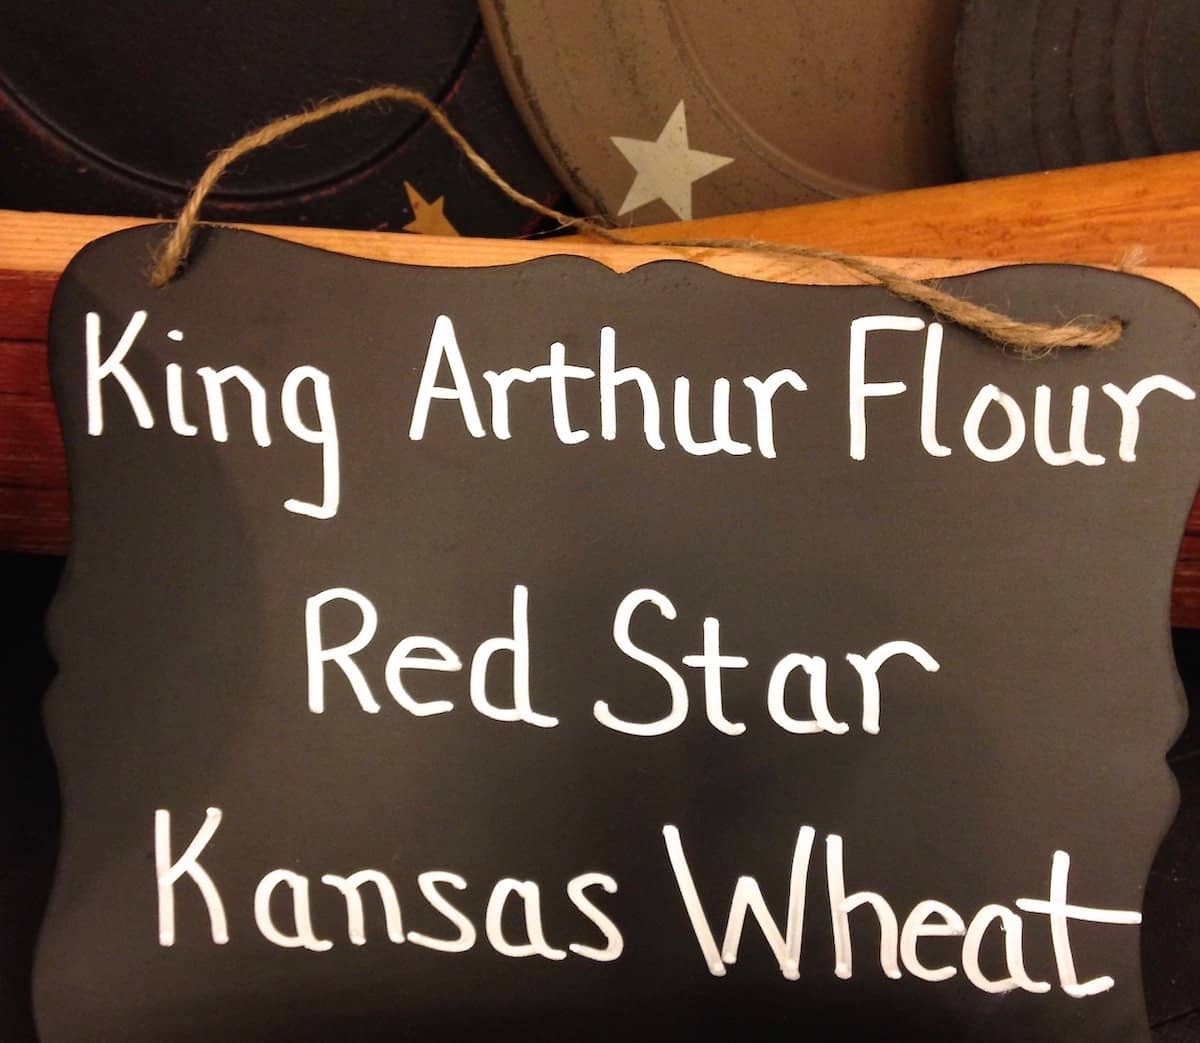 King Arthur Flour, Red Star and Kansas Wheat sign.